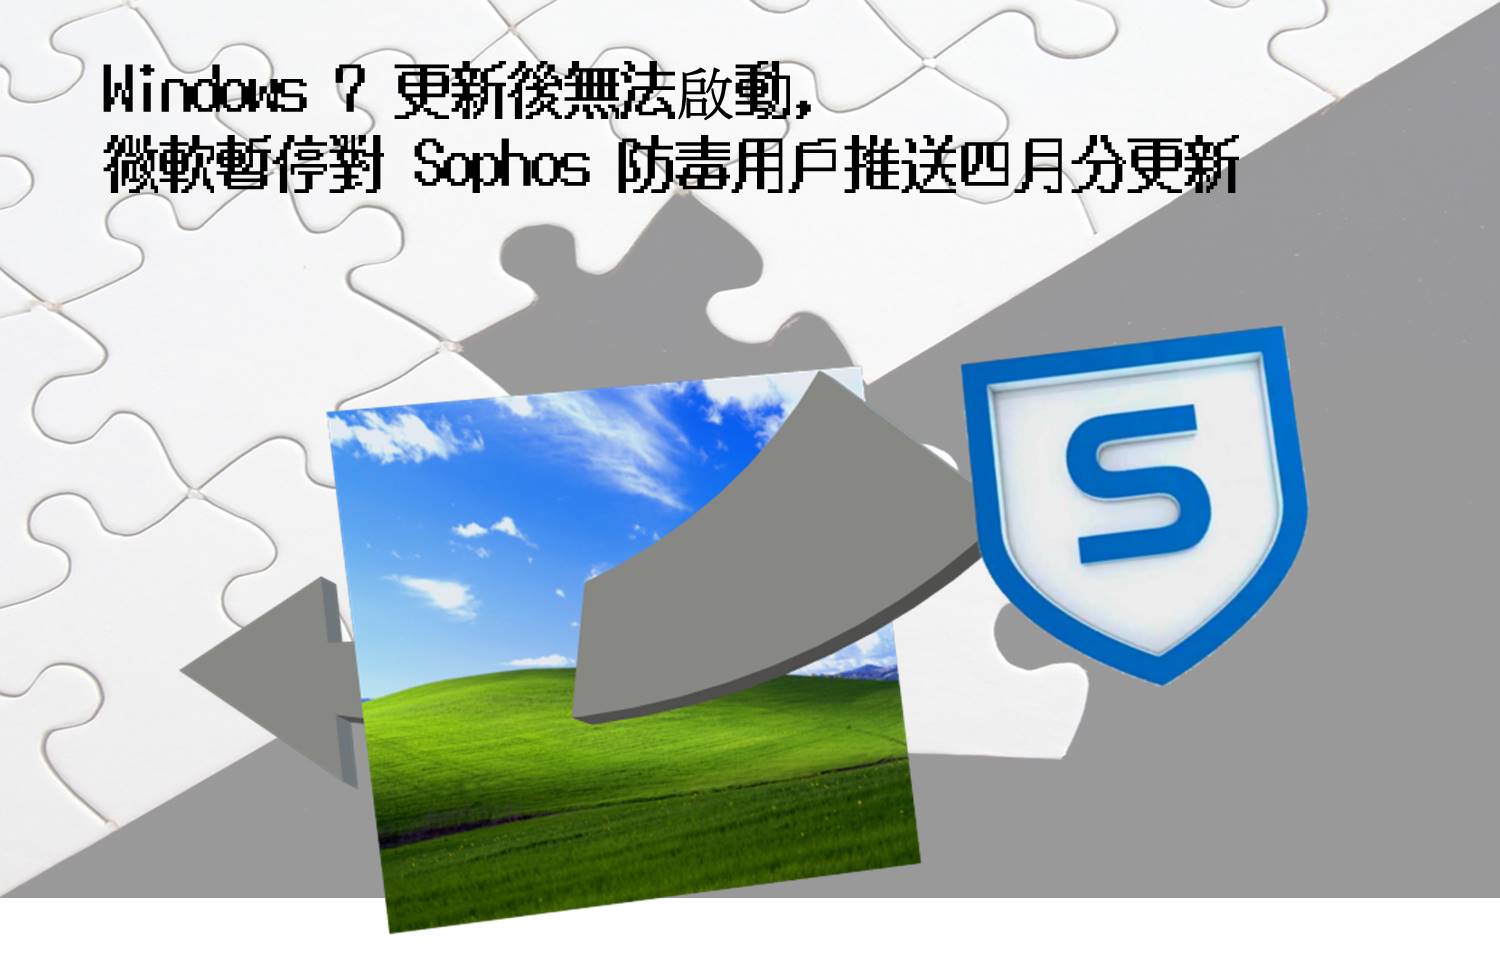 Windows 7 更新後無法啟動，微軟暫停對 Sophos 防毒用戶推送四月分更新